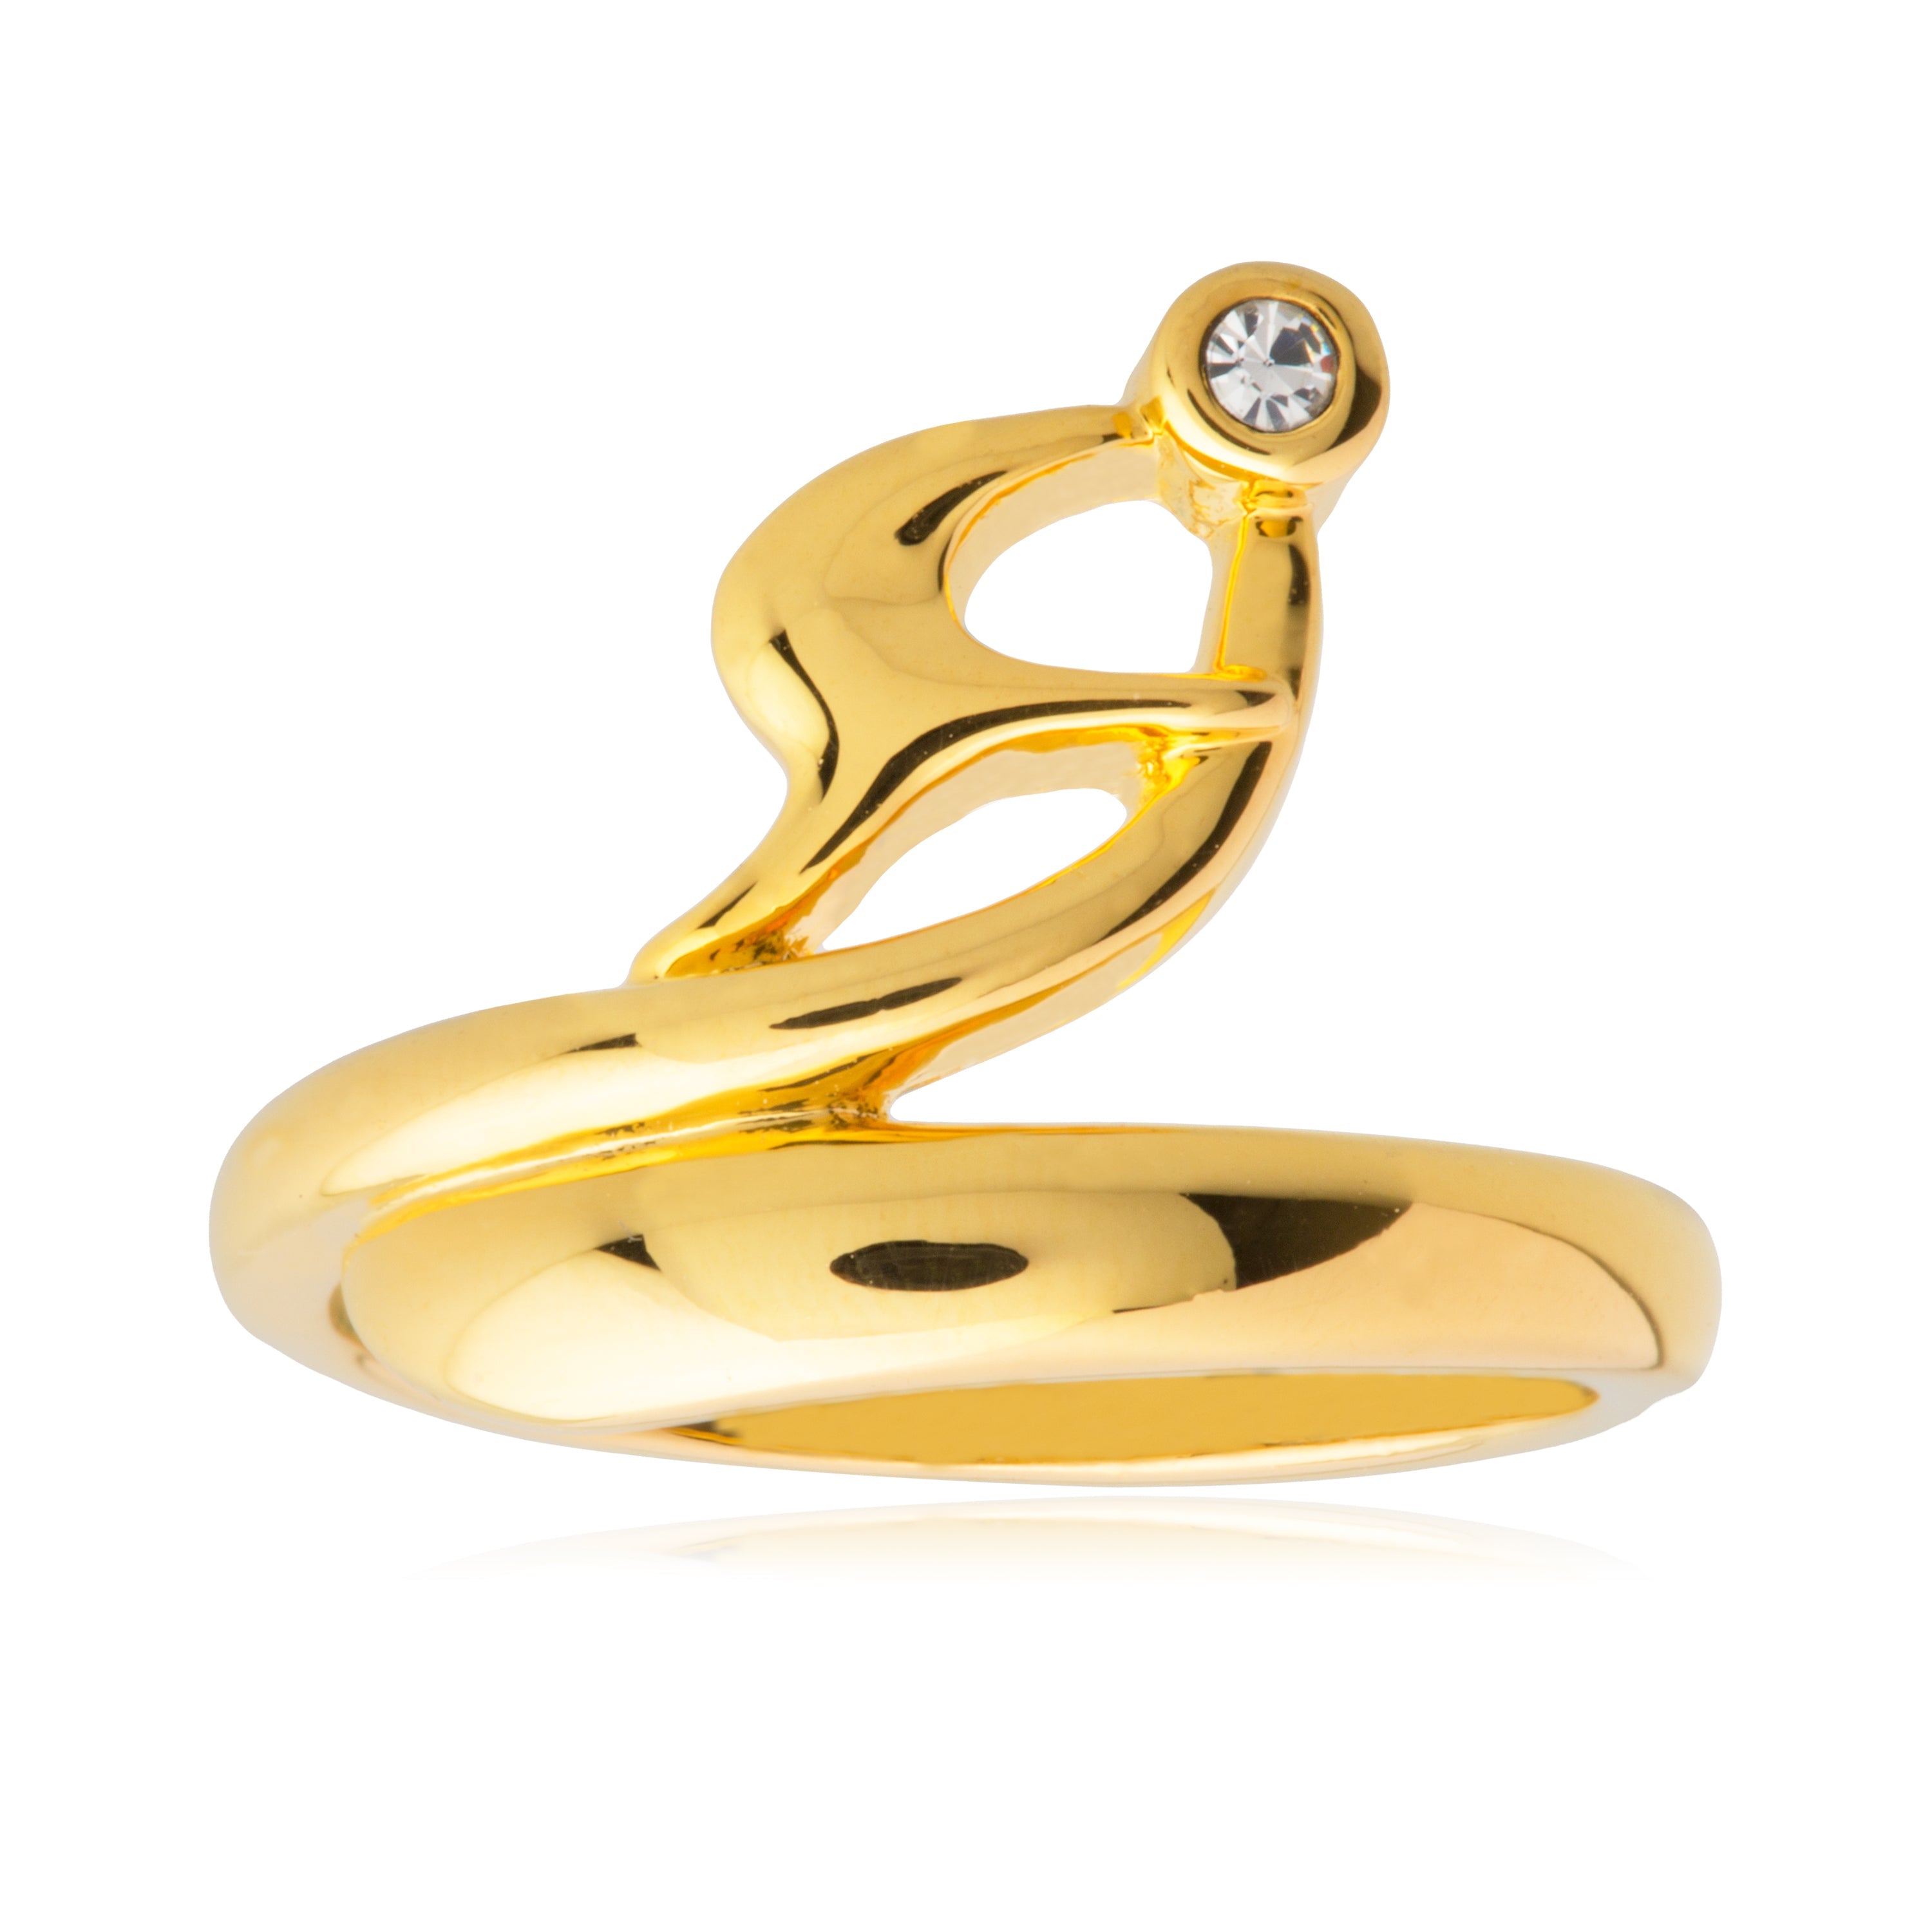 Wholesaler of Three flower bud gold ring design | Jewelxy - 183455